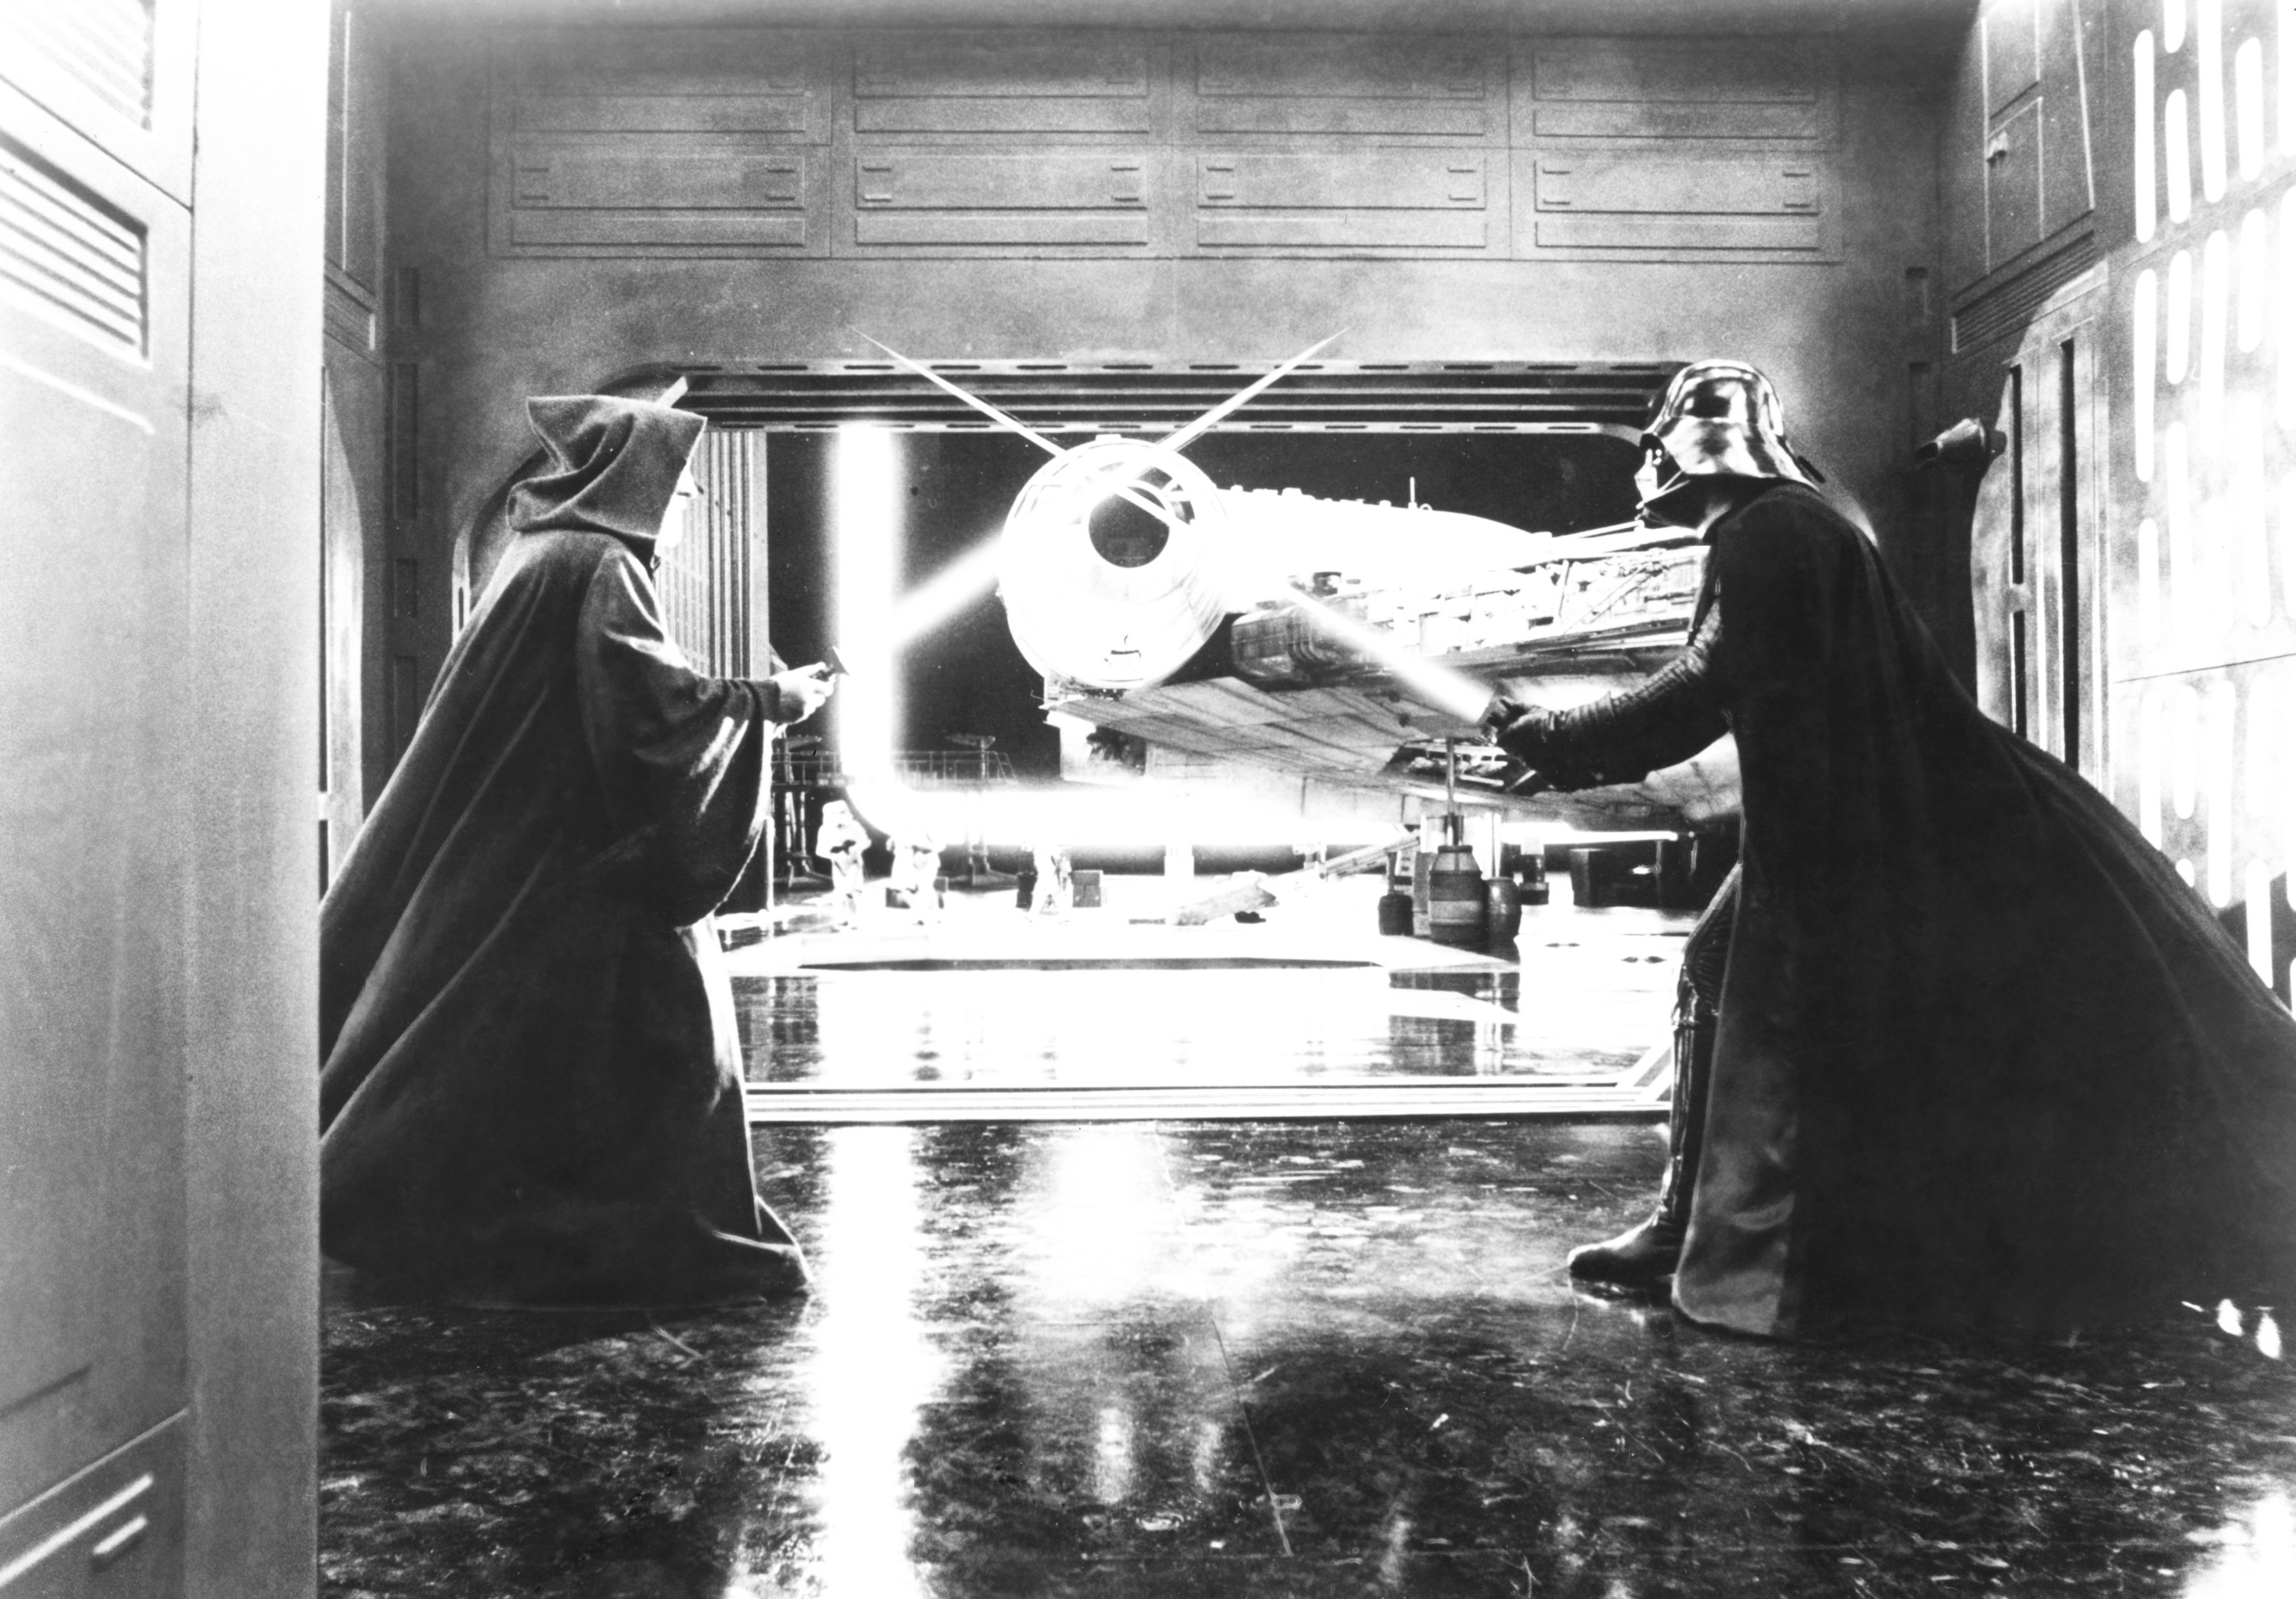 Obi-Wan and Darth Vader in a fight scene